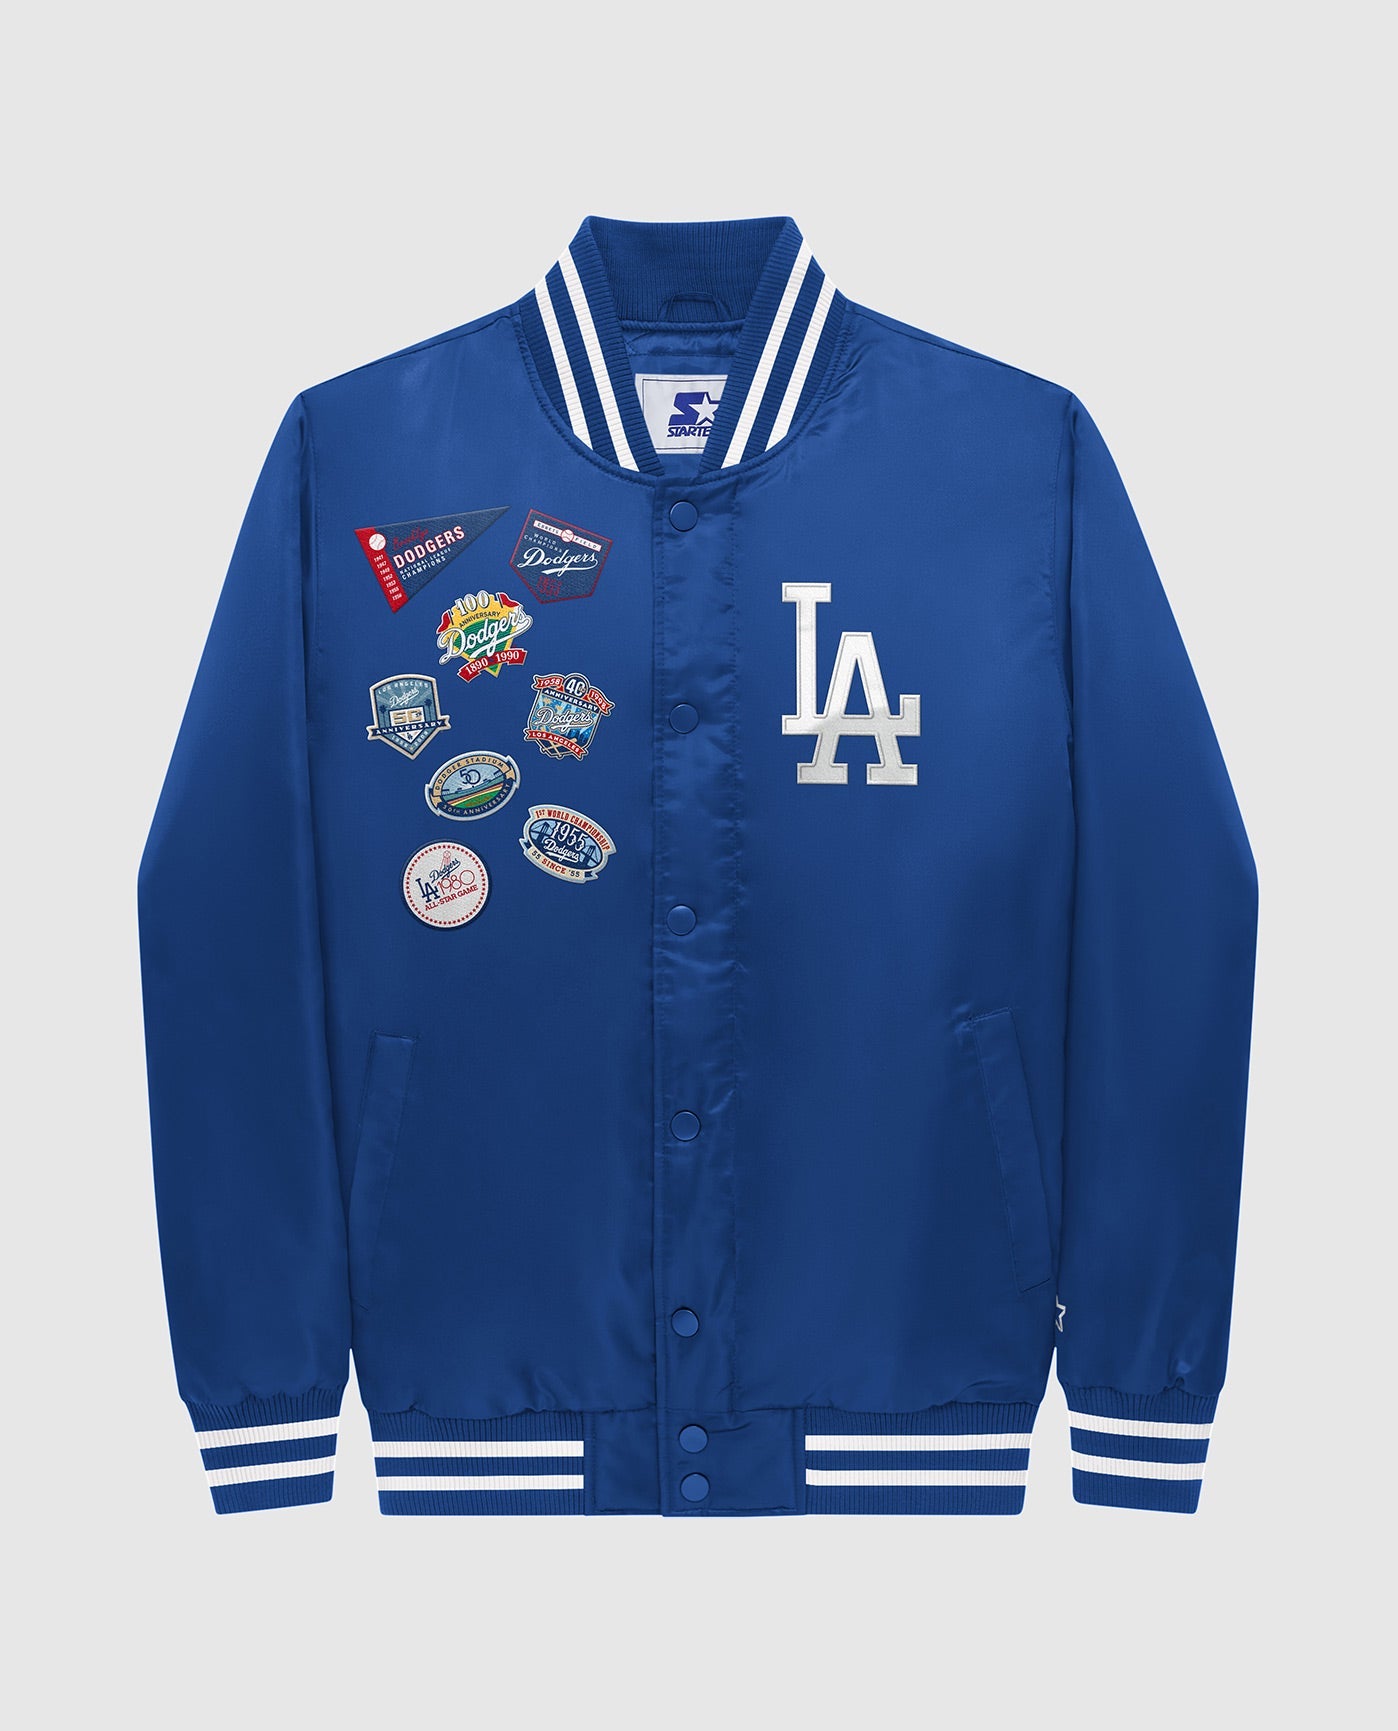 Los Angeles Dodgers Blue Jacket